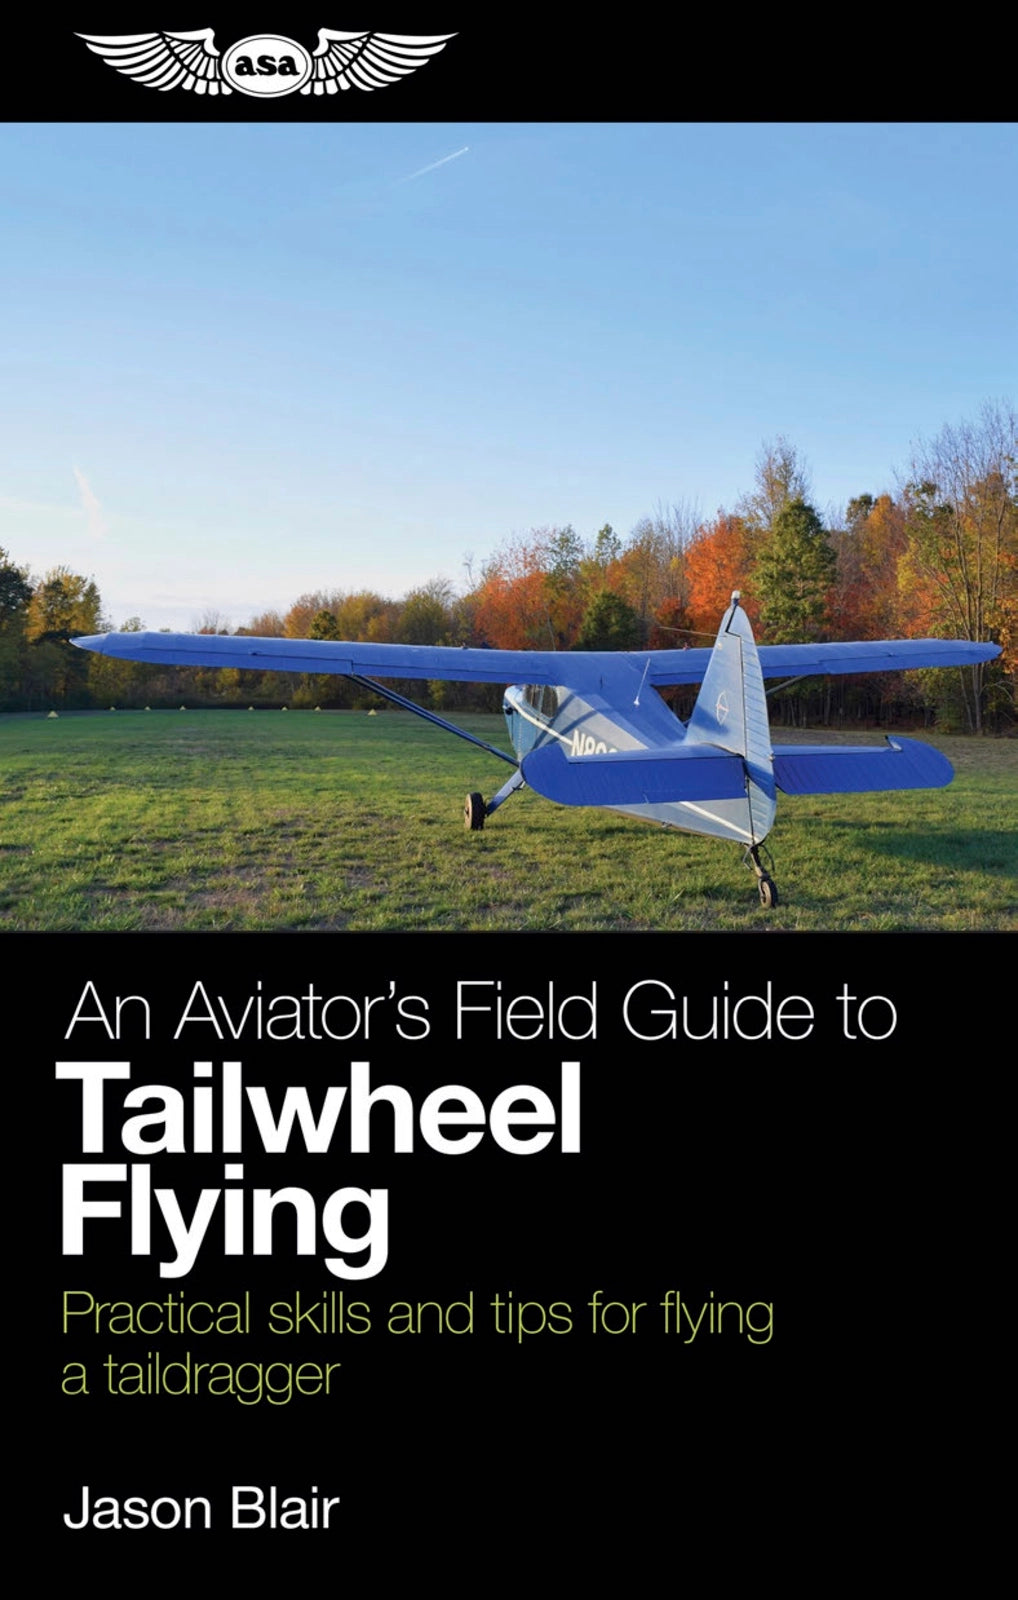 ASA An Aviator's Field Guide to Tailwheel Flying - by Jason Blair